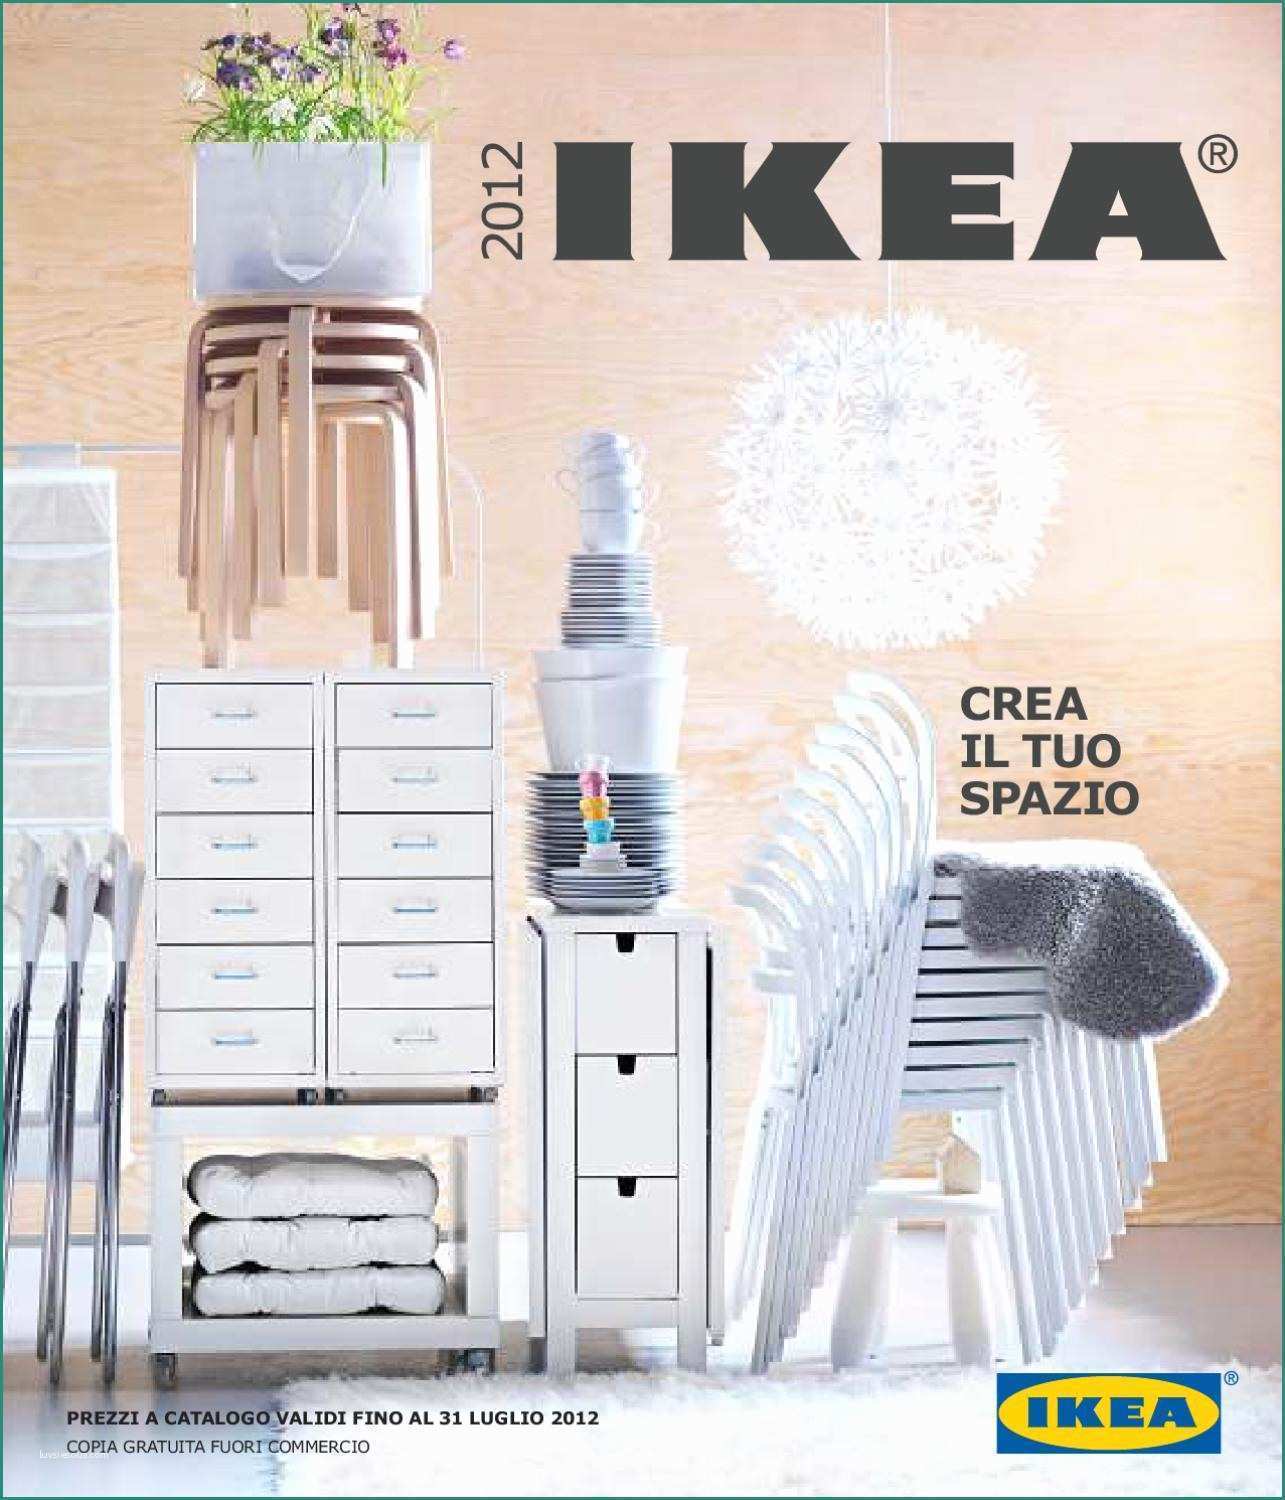 Sgabello Ergonomico Ikea E Ikea Catalogo 2012 by Mercializzando toscana issuu